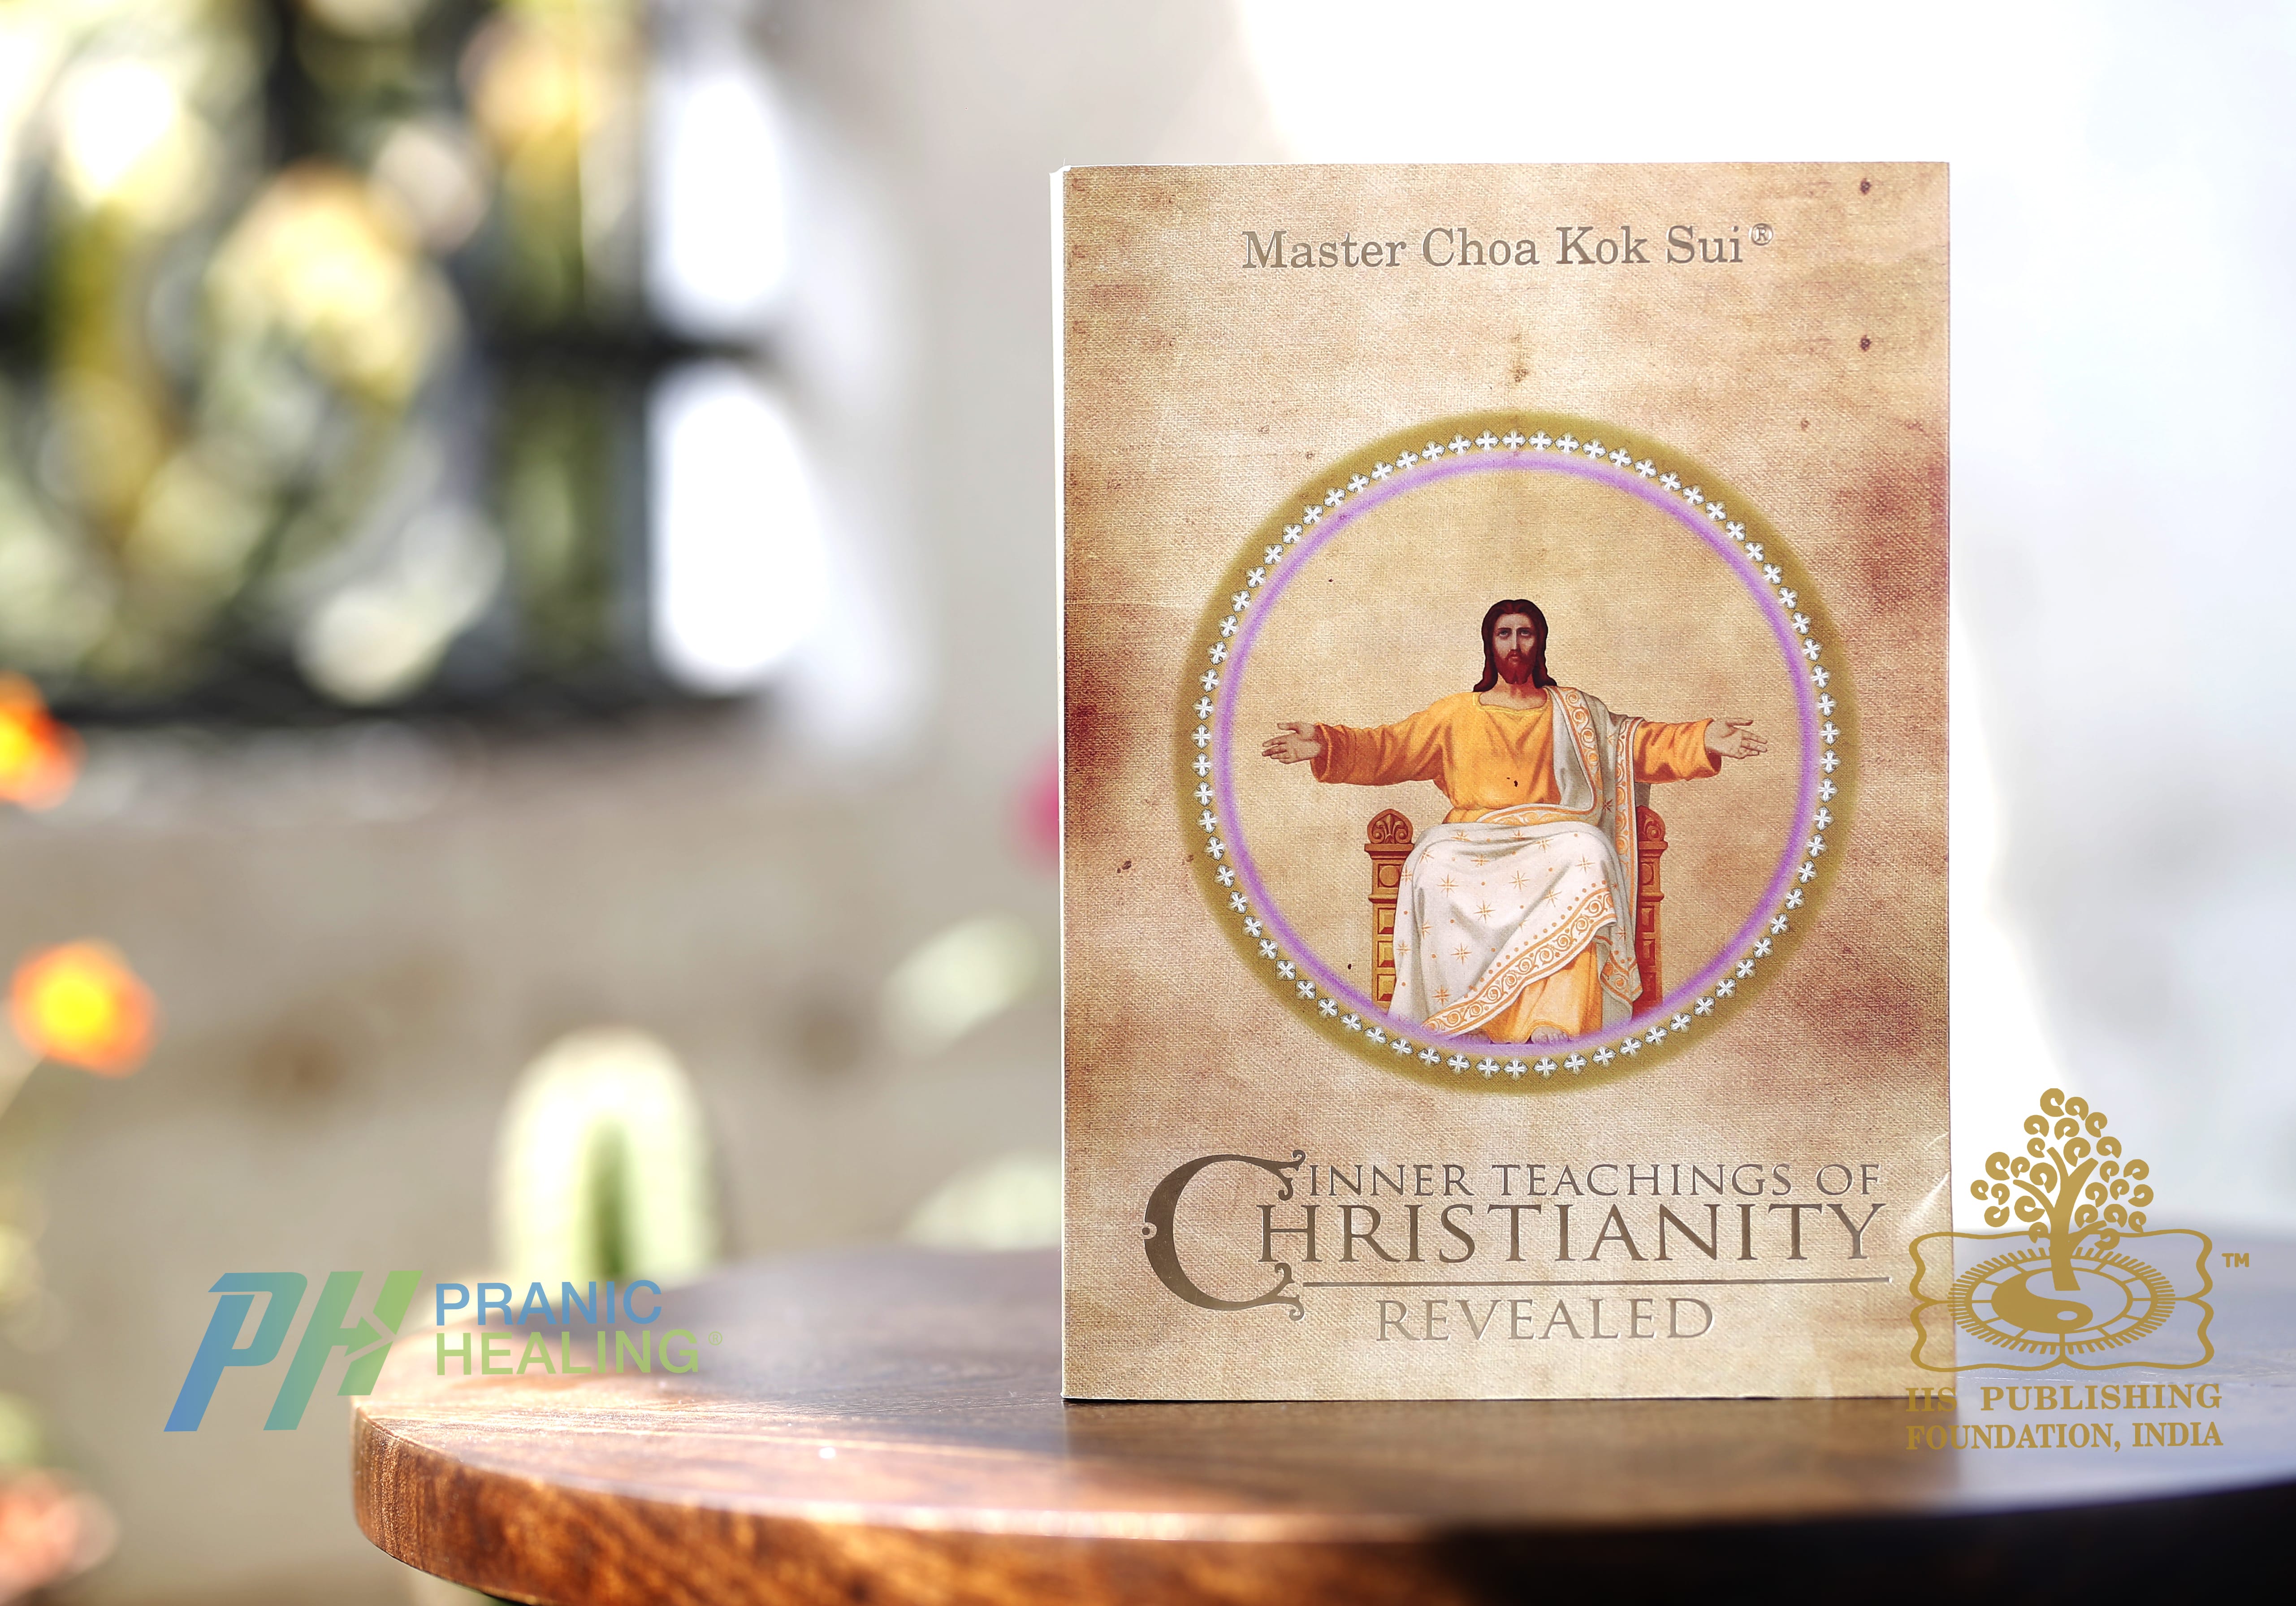 https://shop.pranichealingmumbai.com/products/christianity-revealed-book